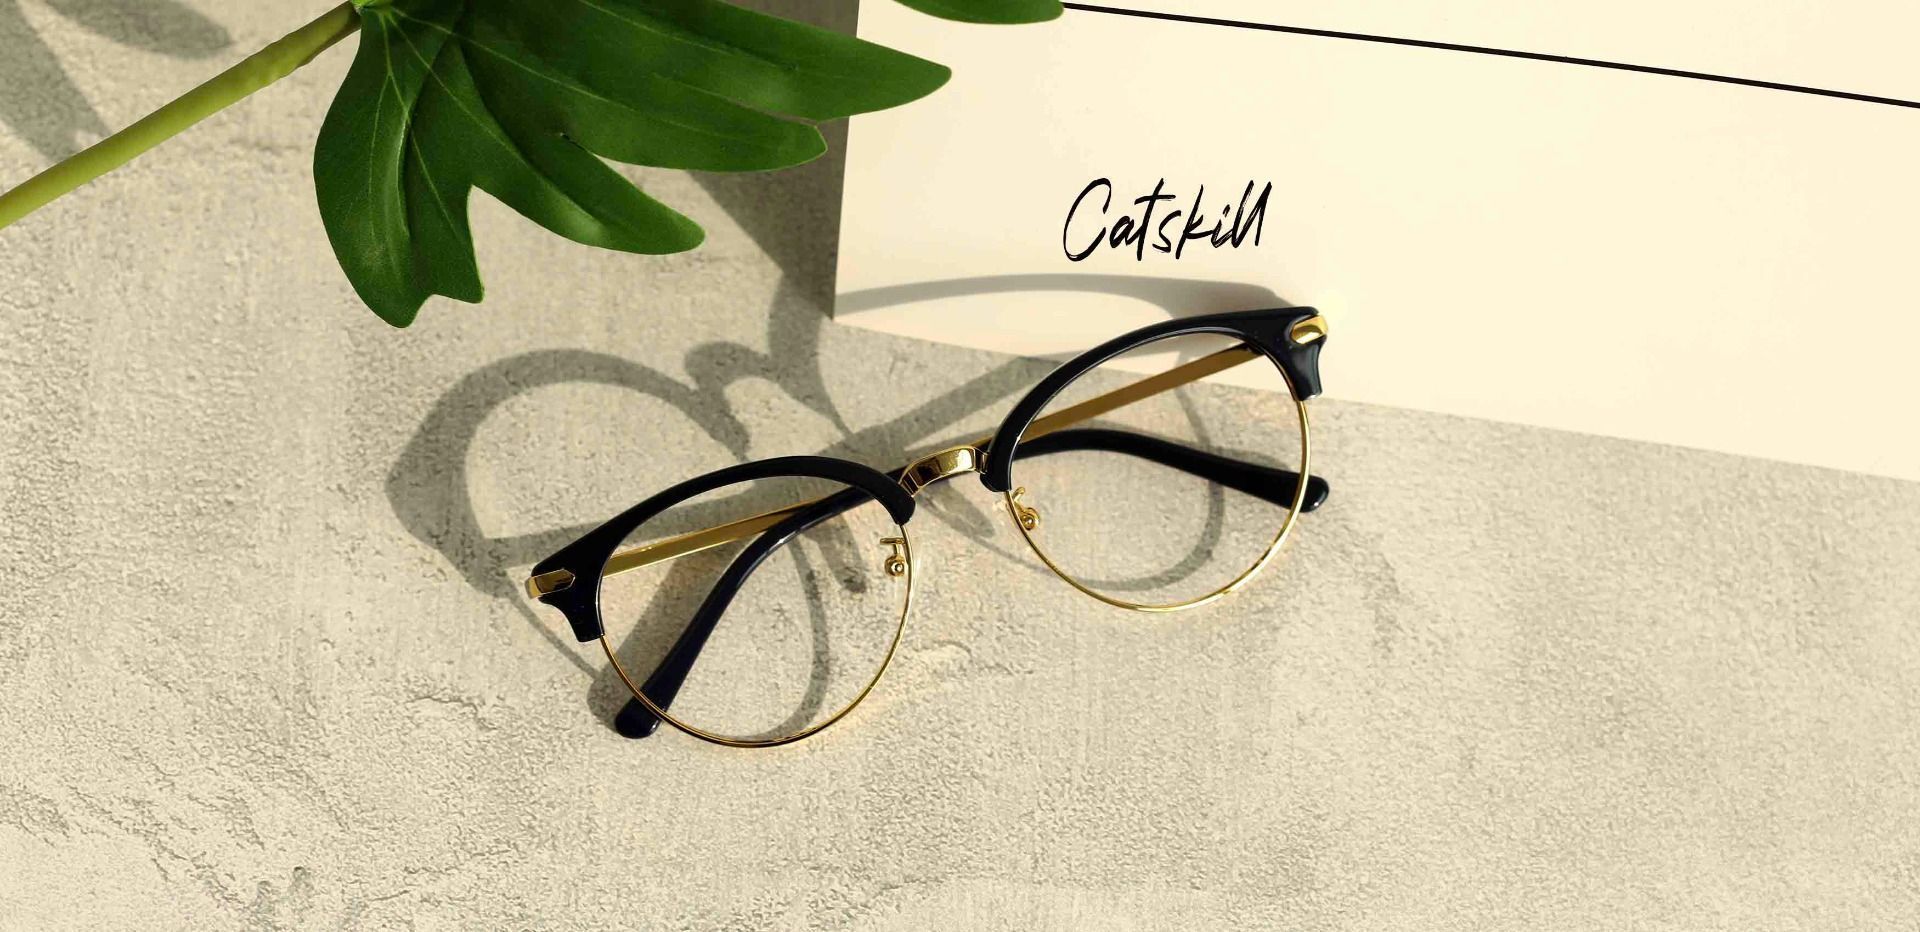 Catskill Browline Lined Bifocal Glasses - Blue